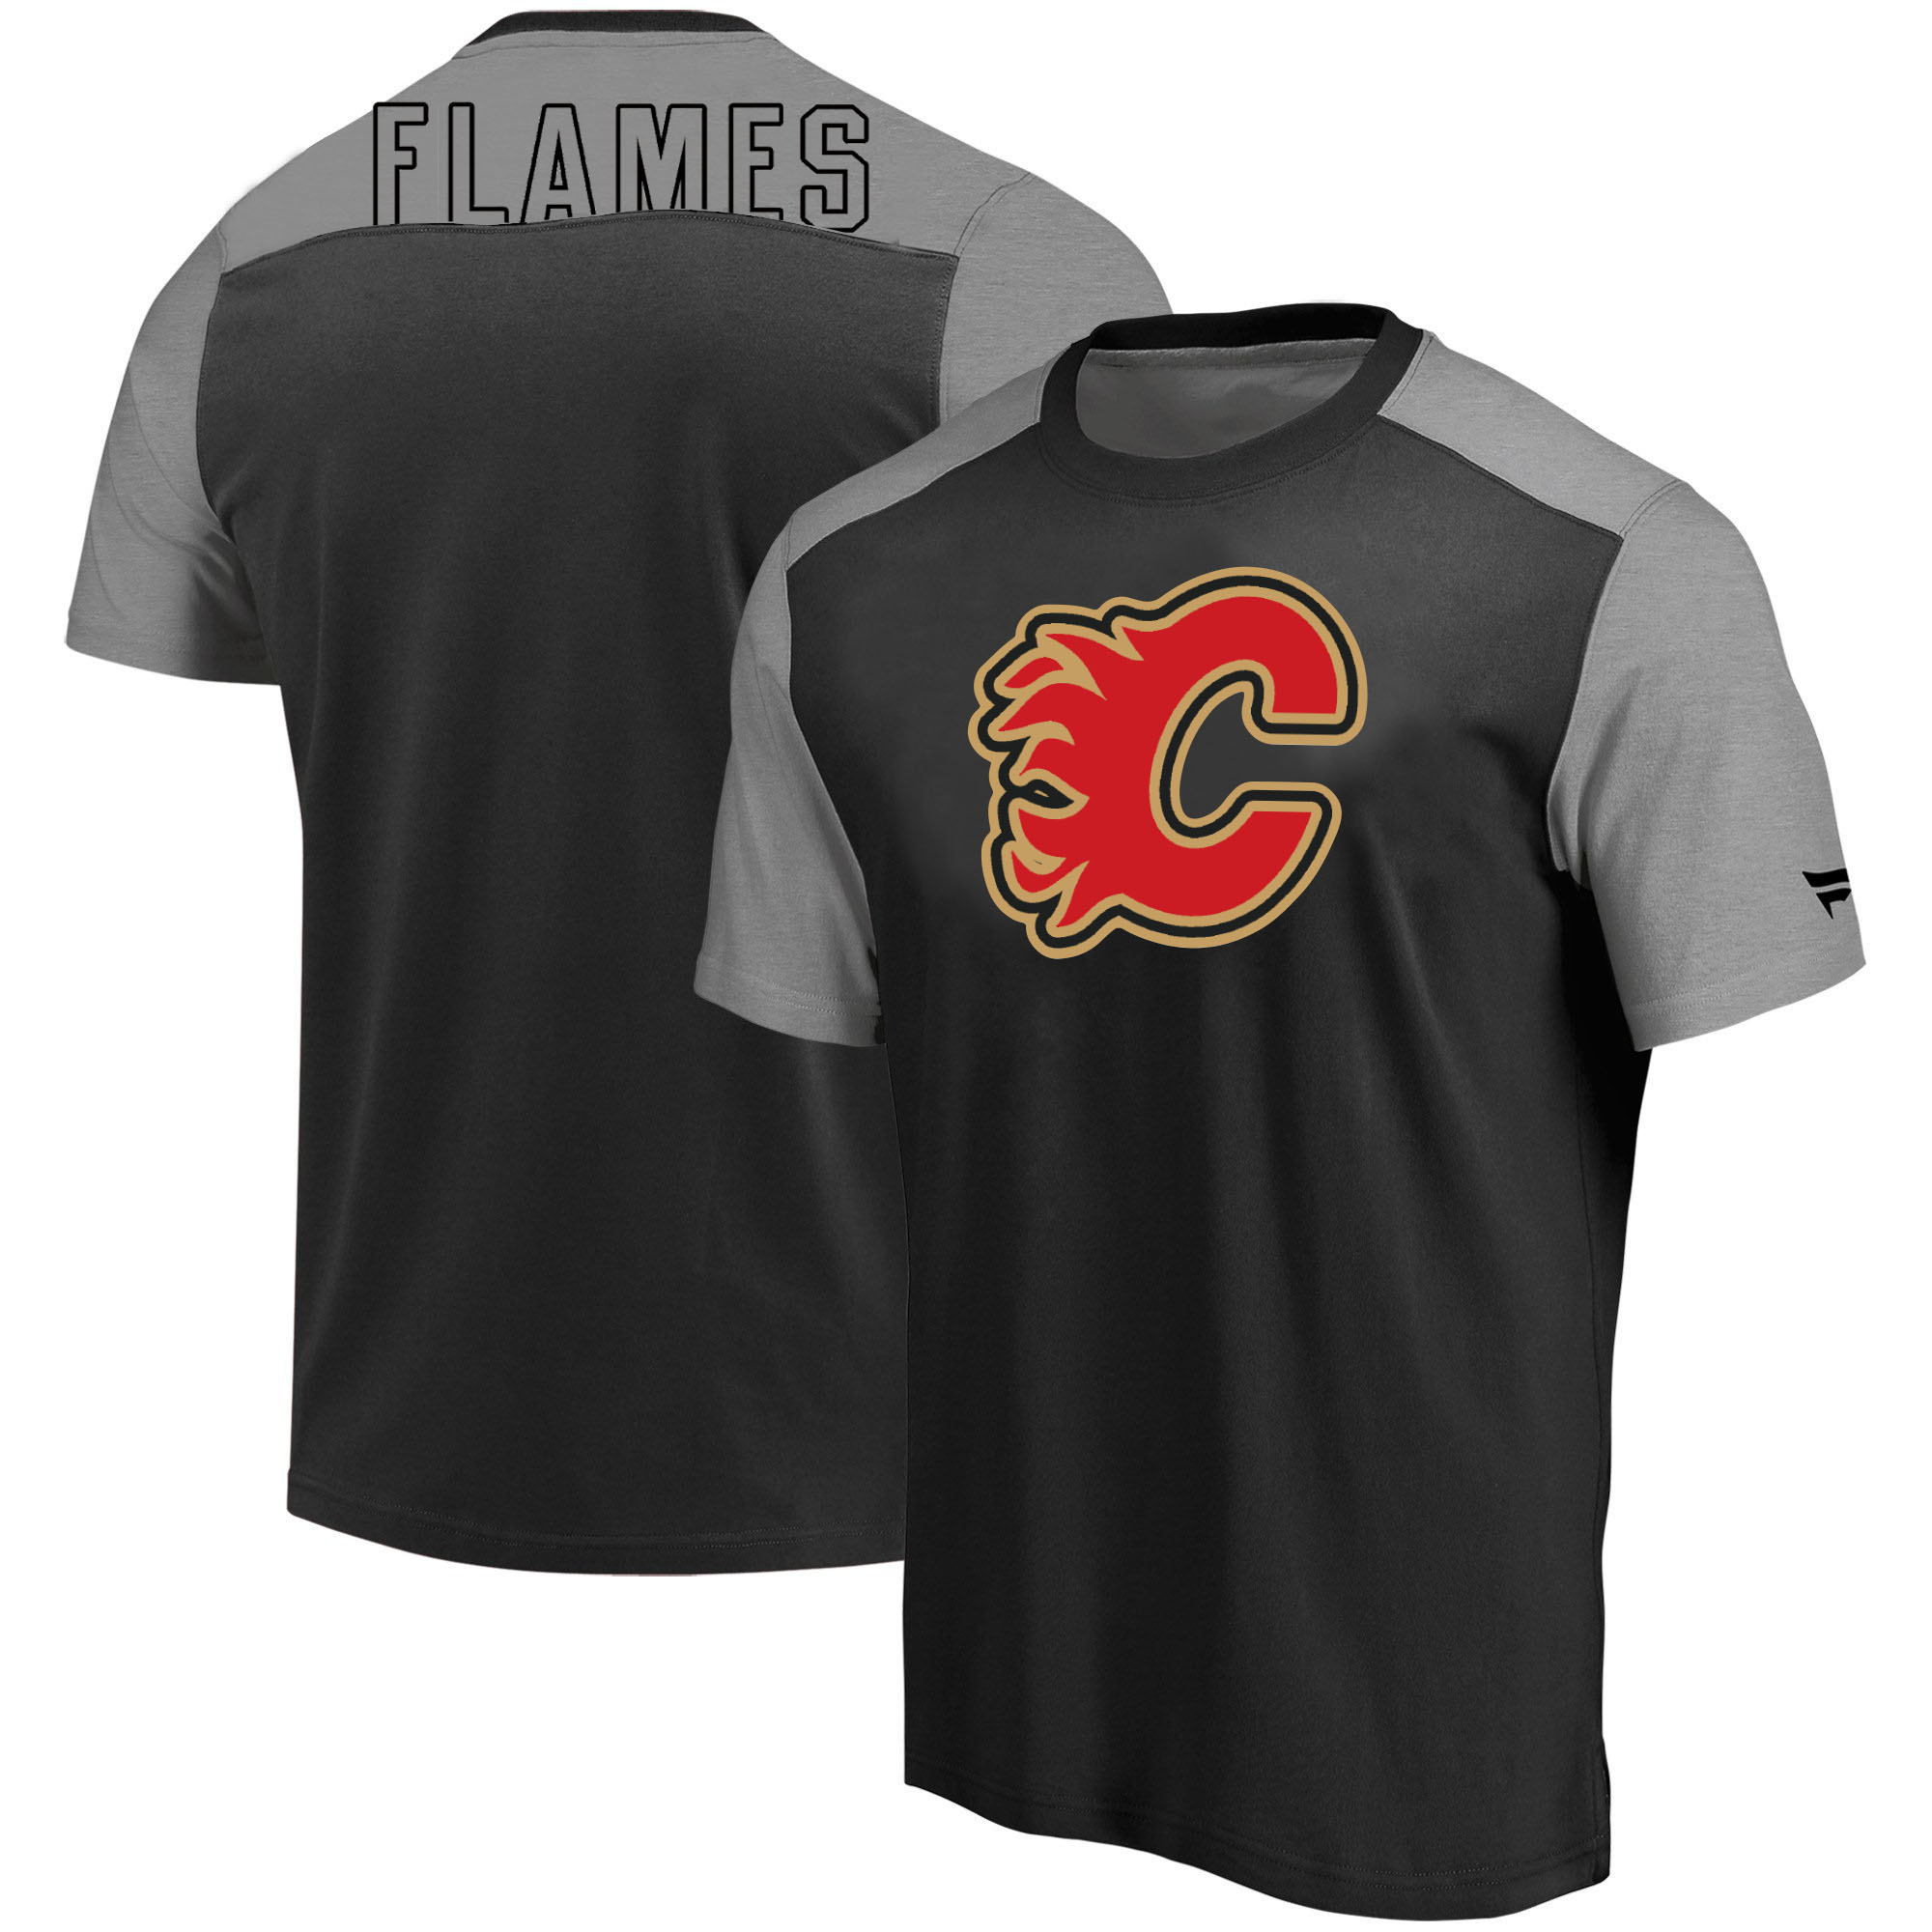 Calgary Flames Fanatics Branded Iconic Blocked T-Shirt Black Heathered Gray